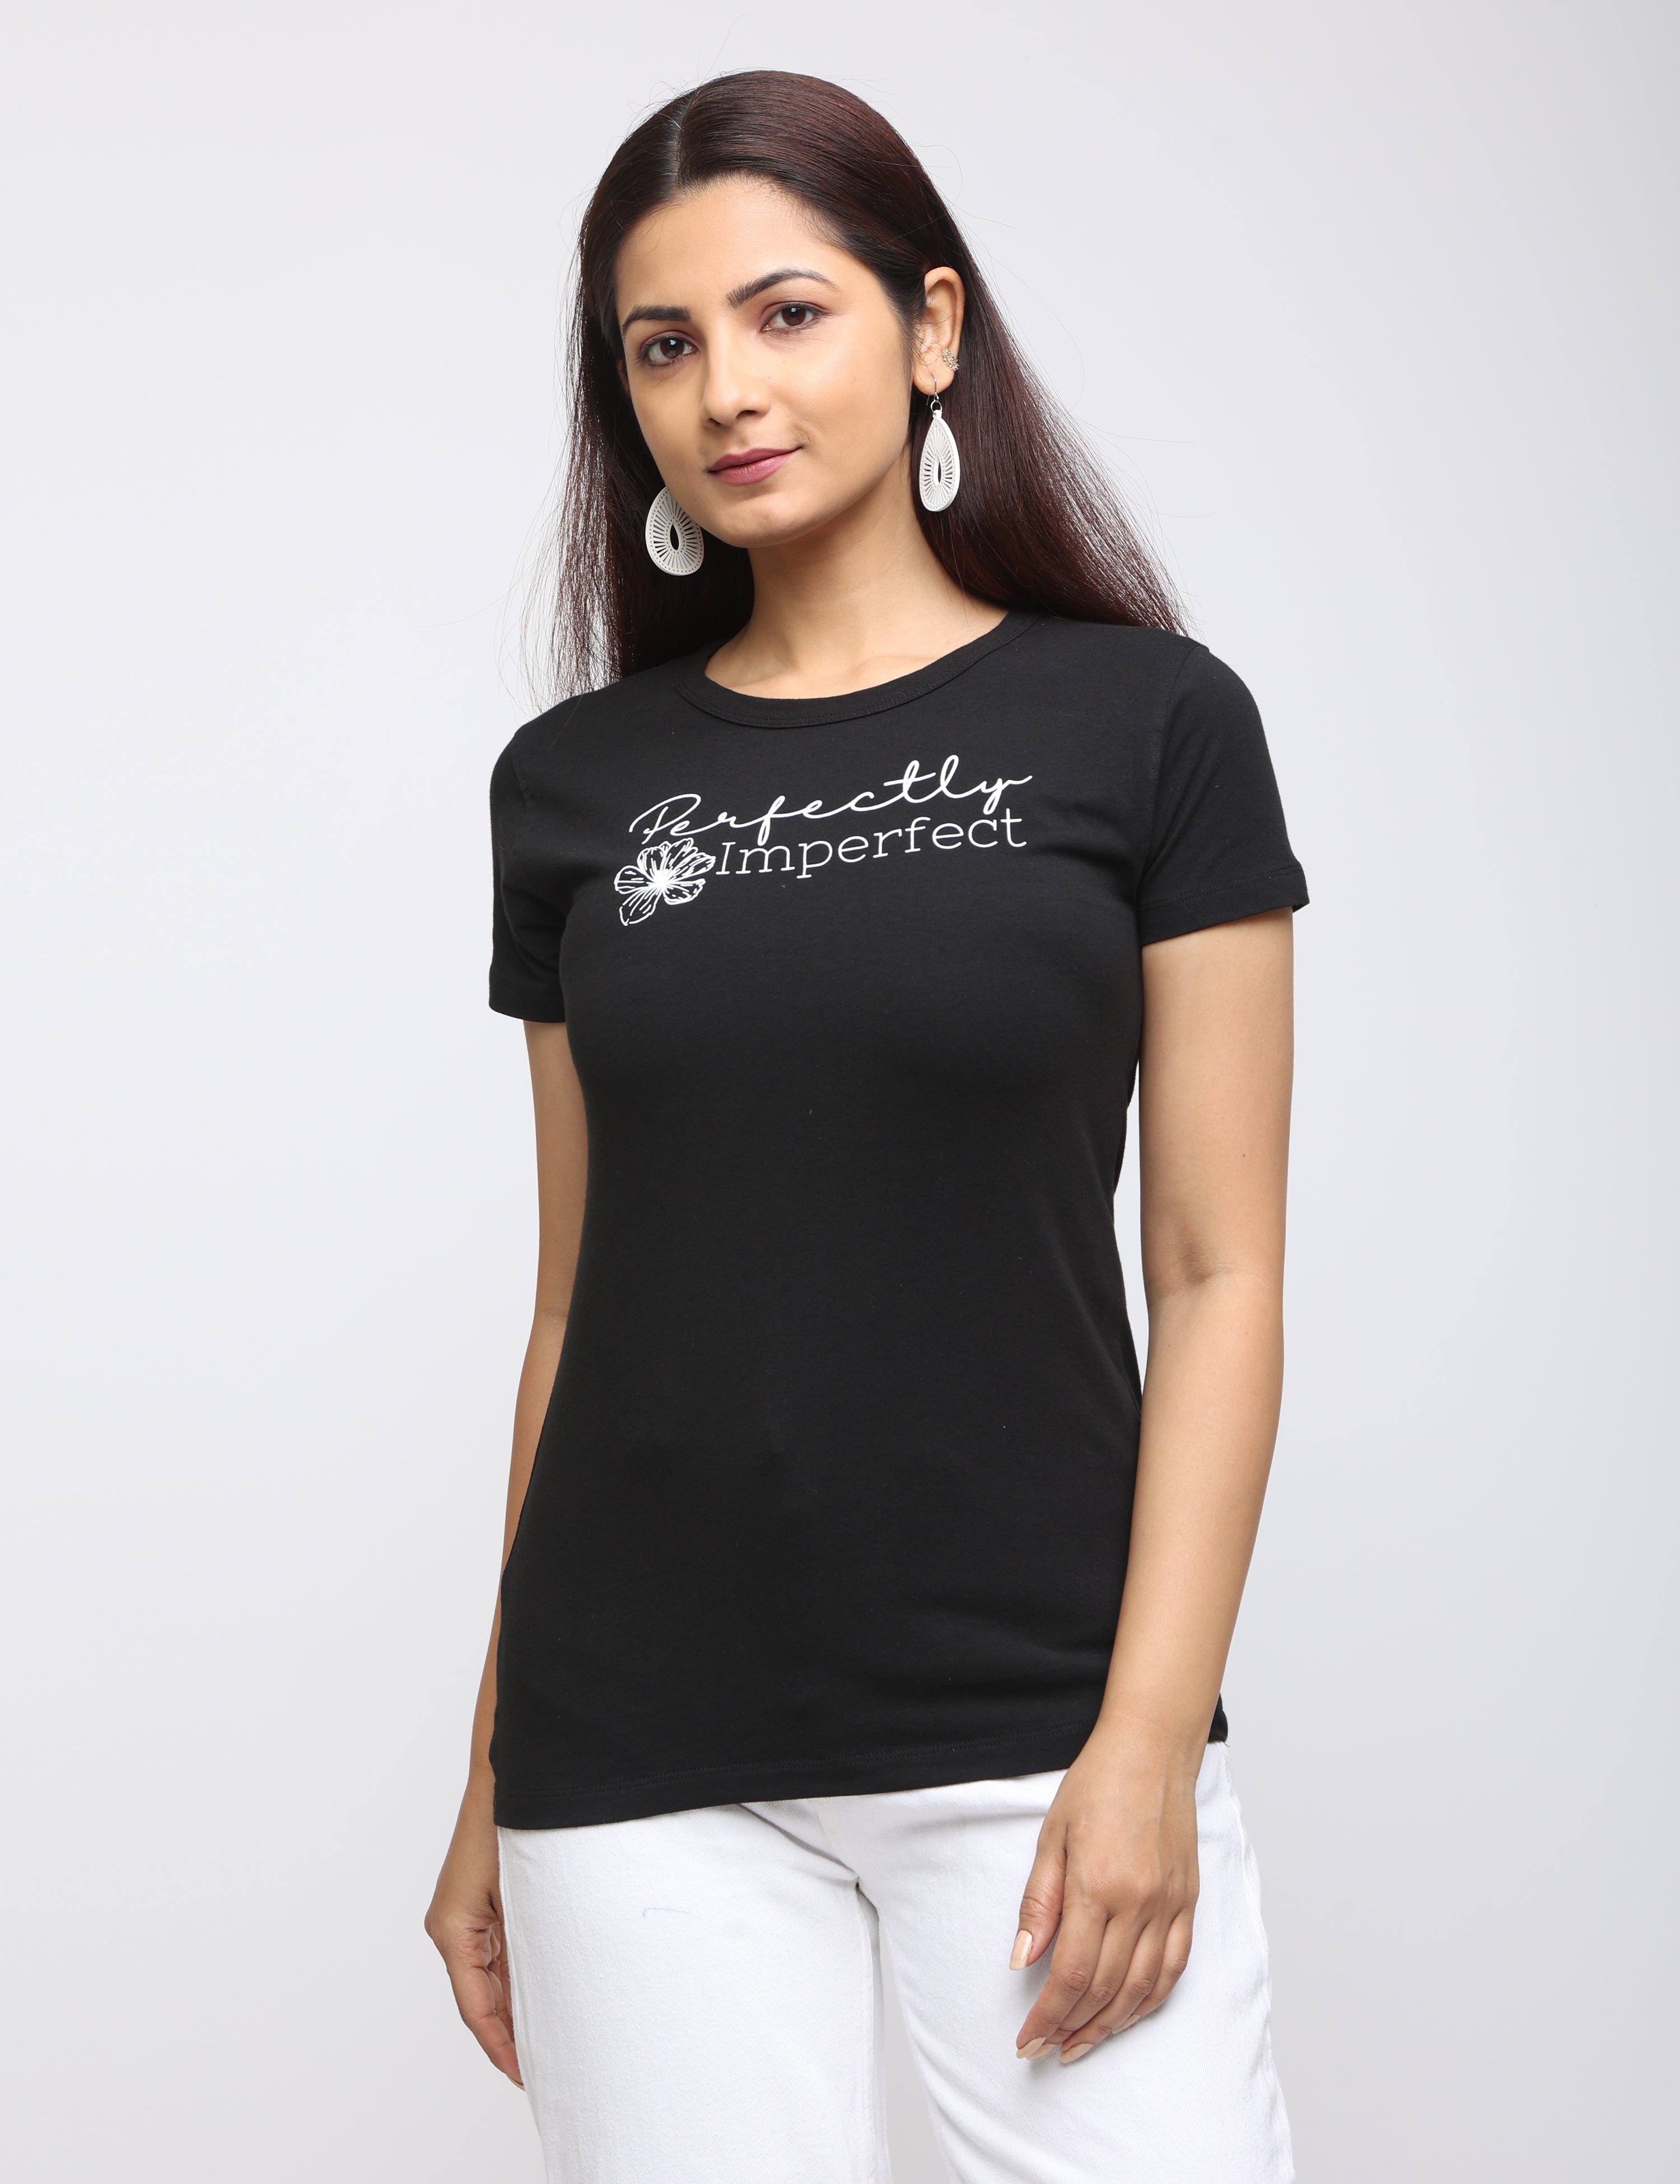 Womens cotton Lycra  printed Tops Tshirt